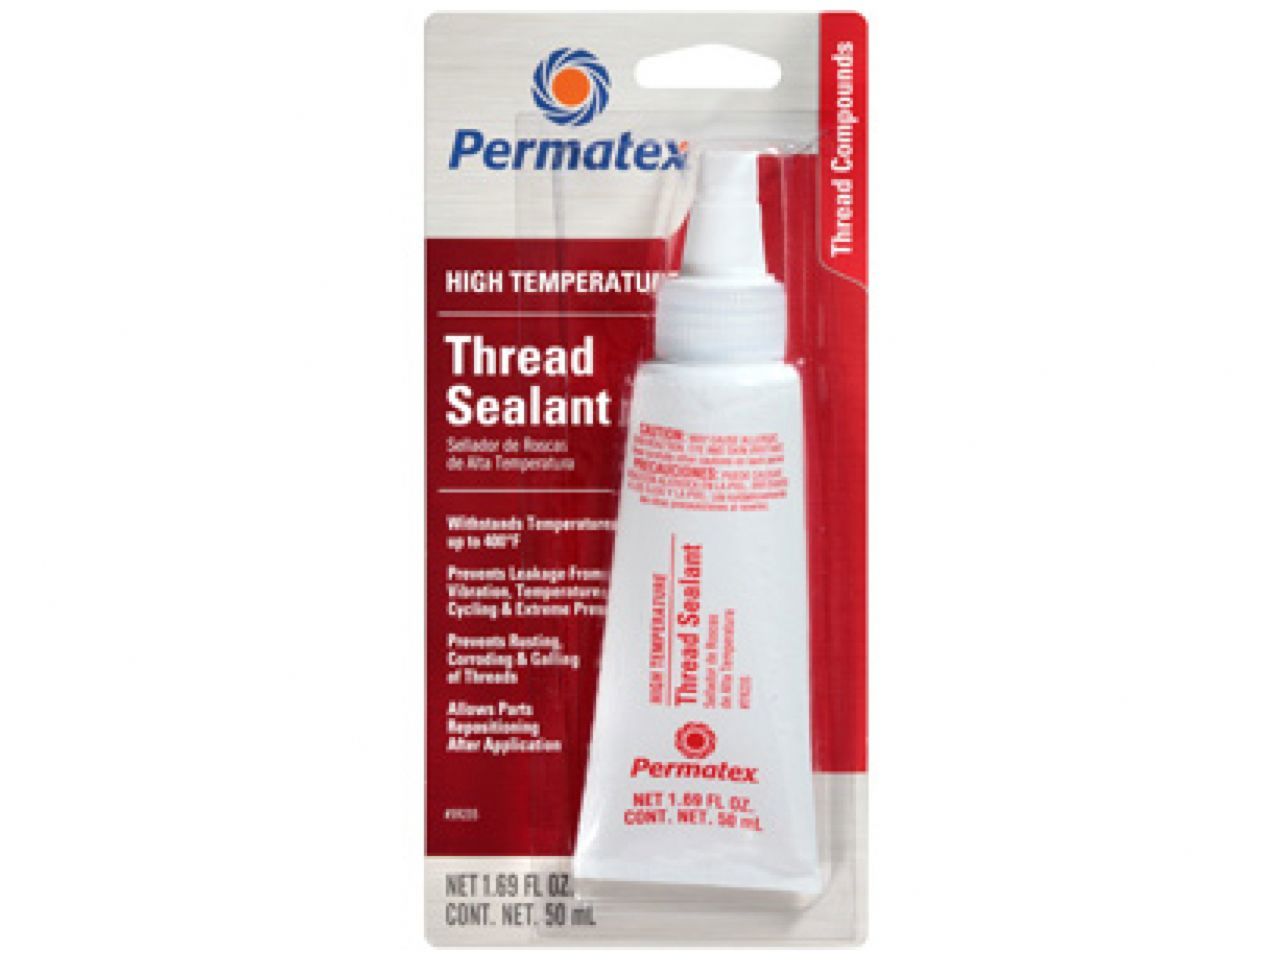 Permatex High Temperature Thread Sealant, 6 mL tube, carded, Each